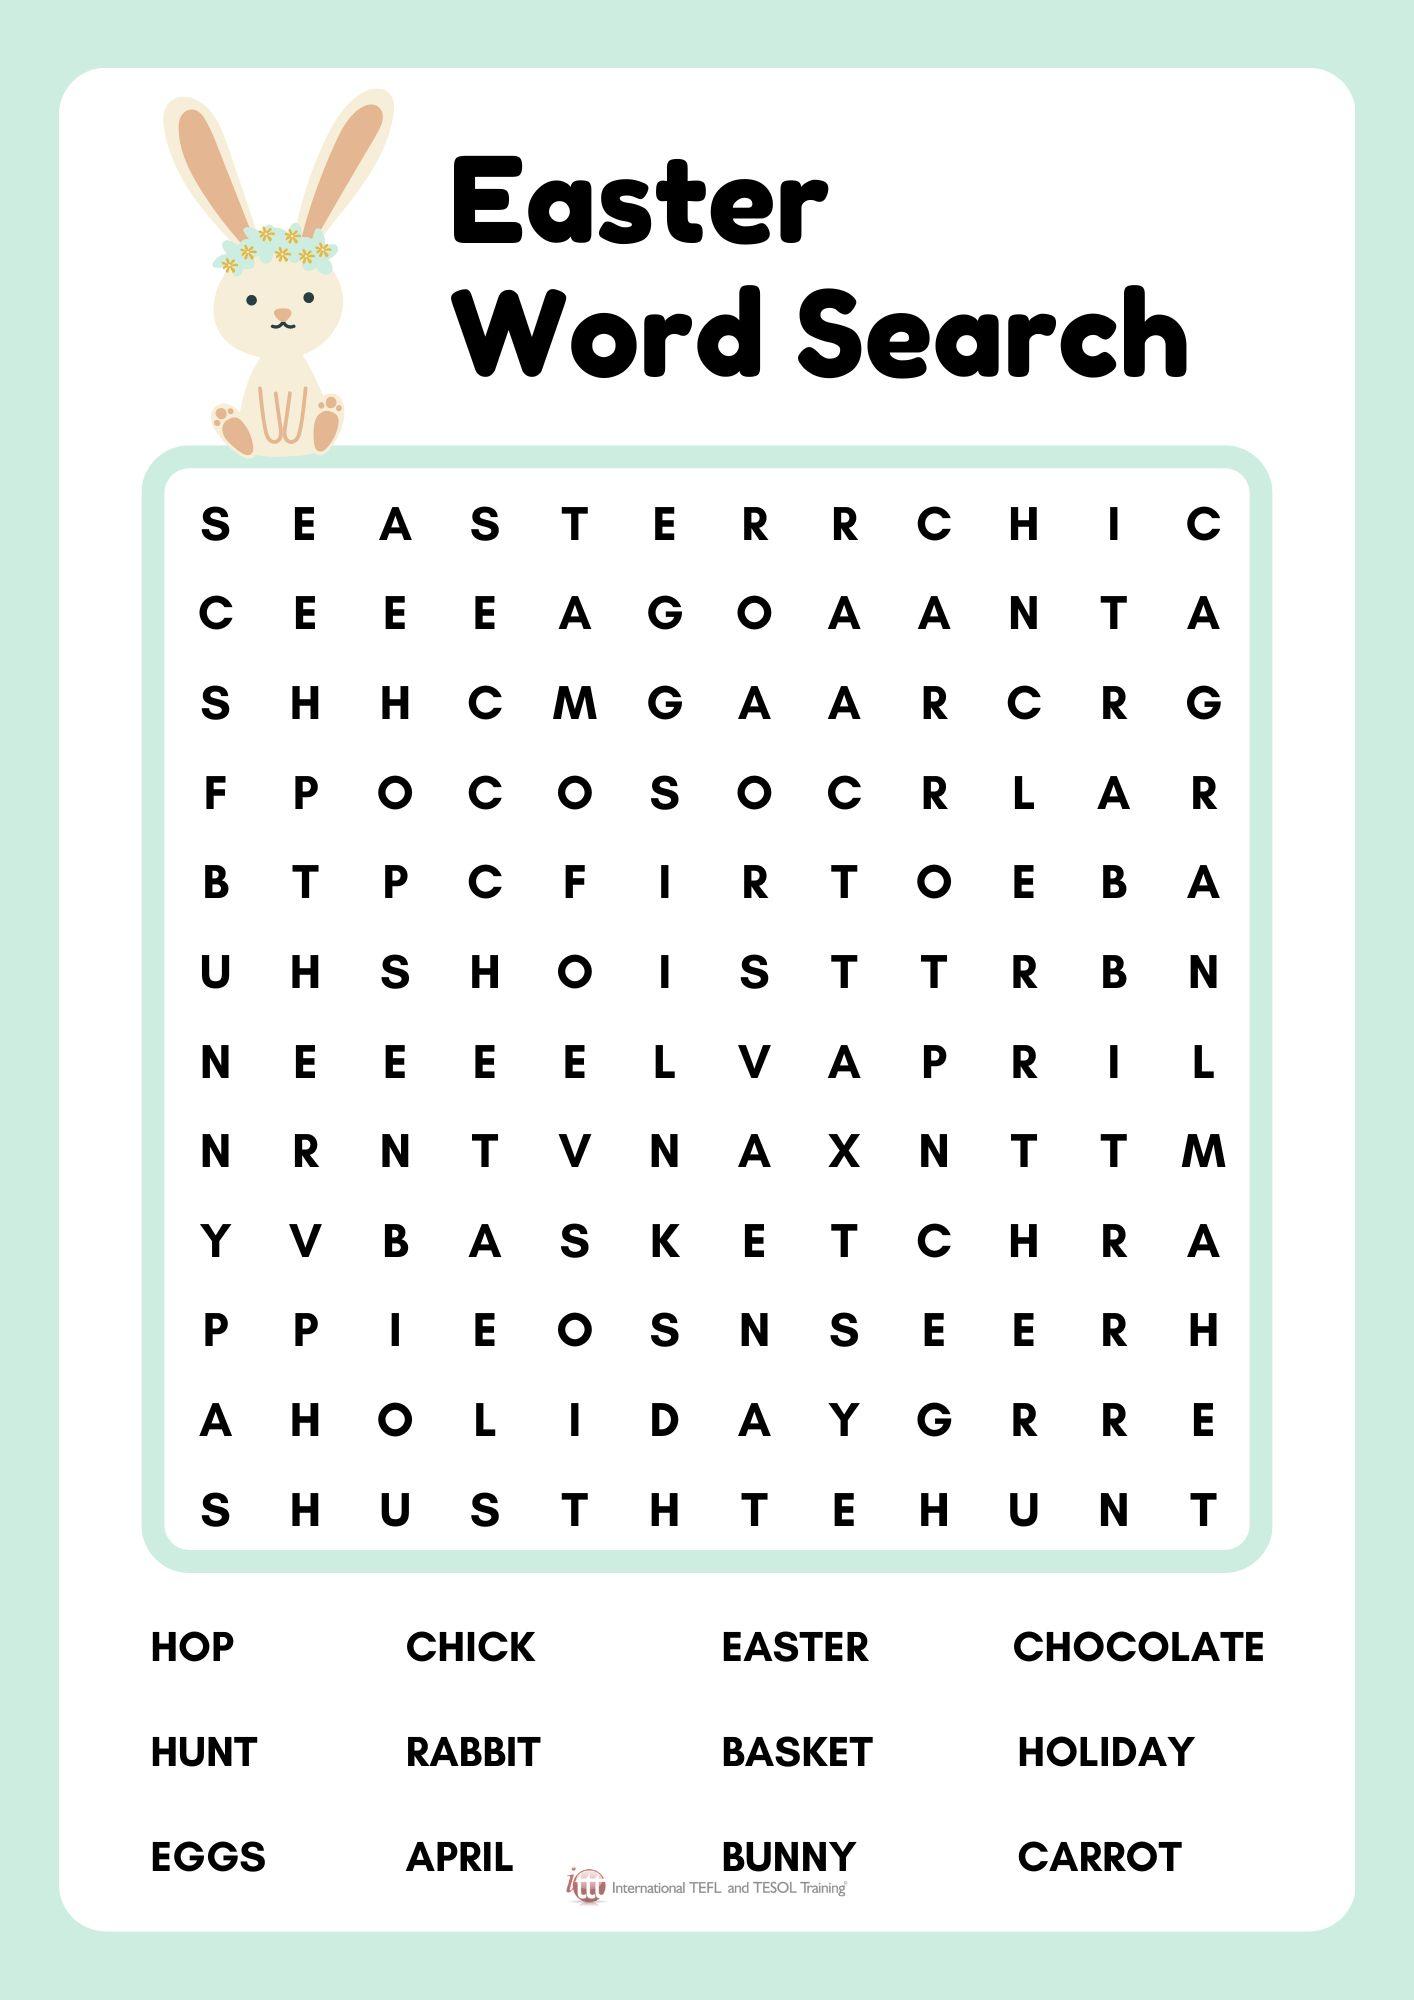 Grammar Corner Easter Word Search II